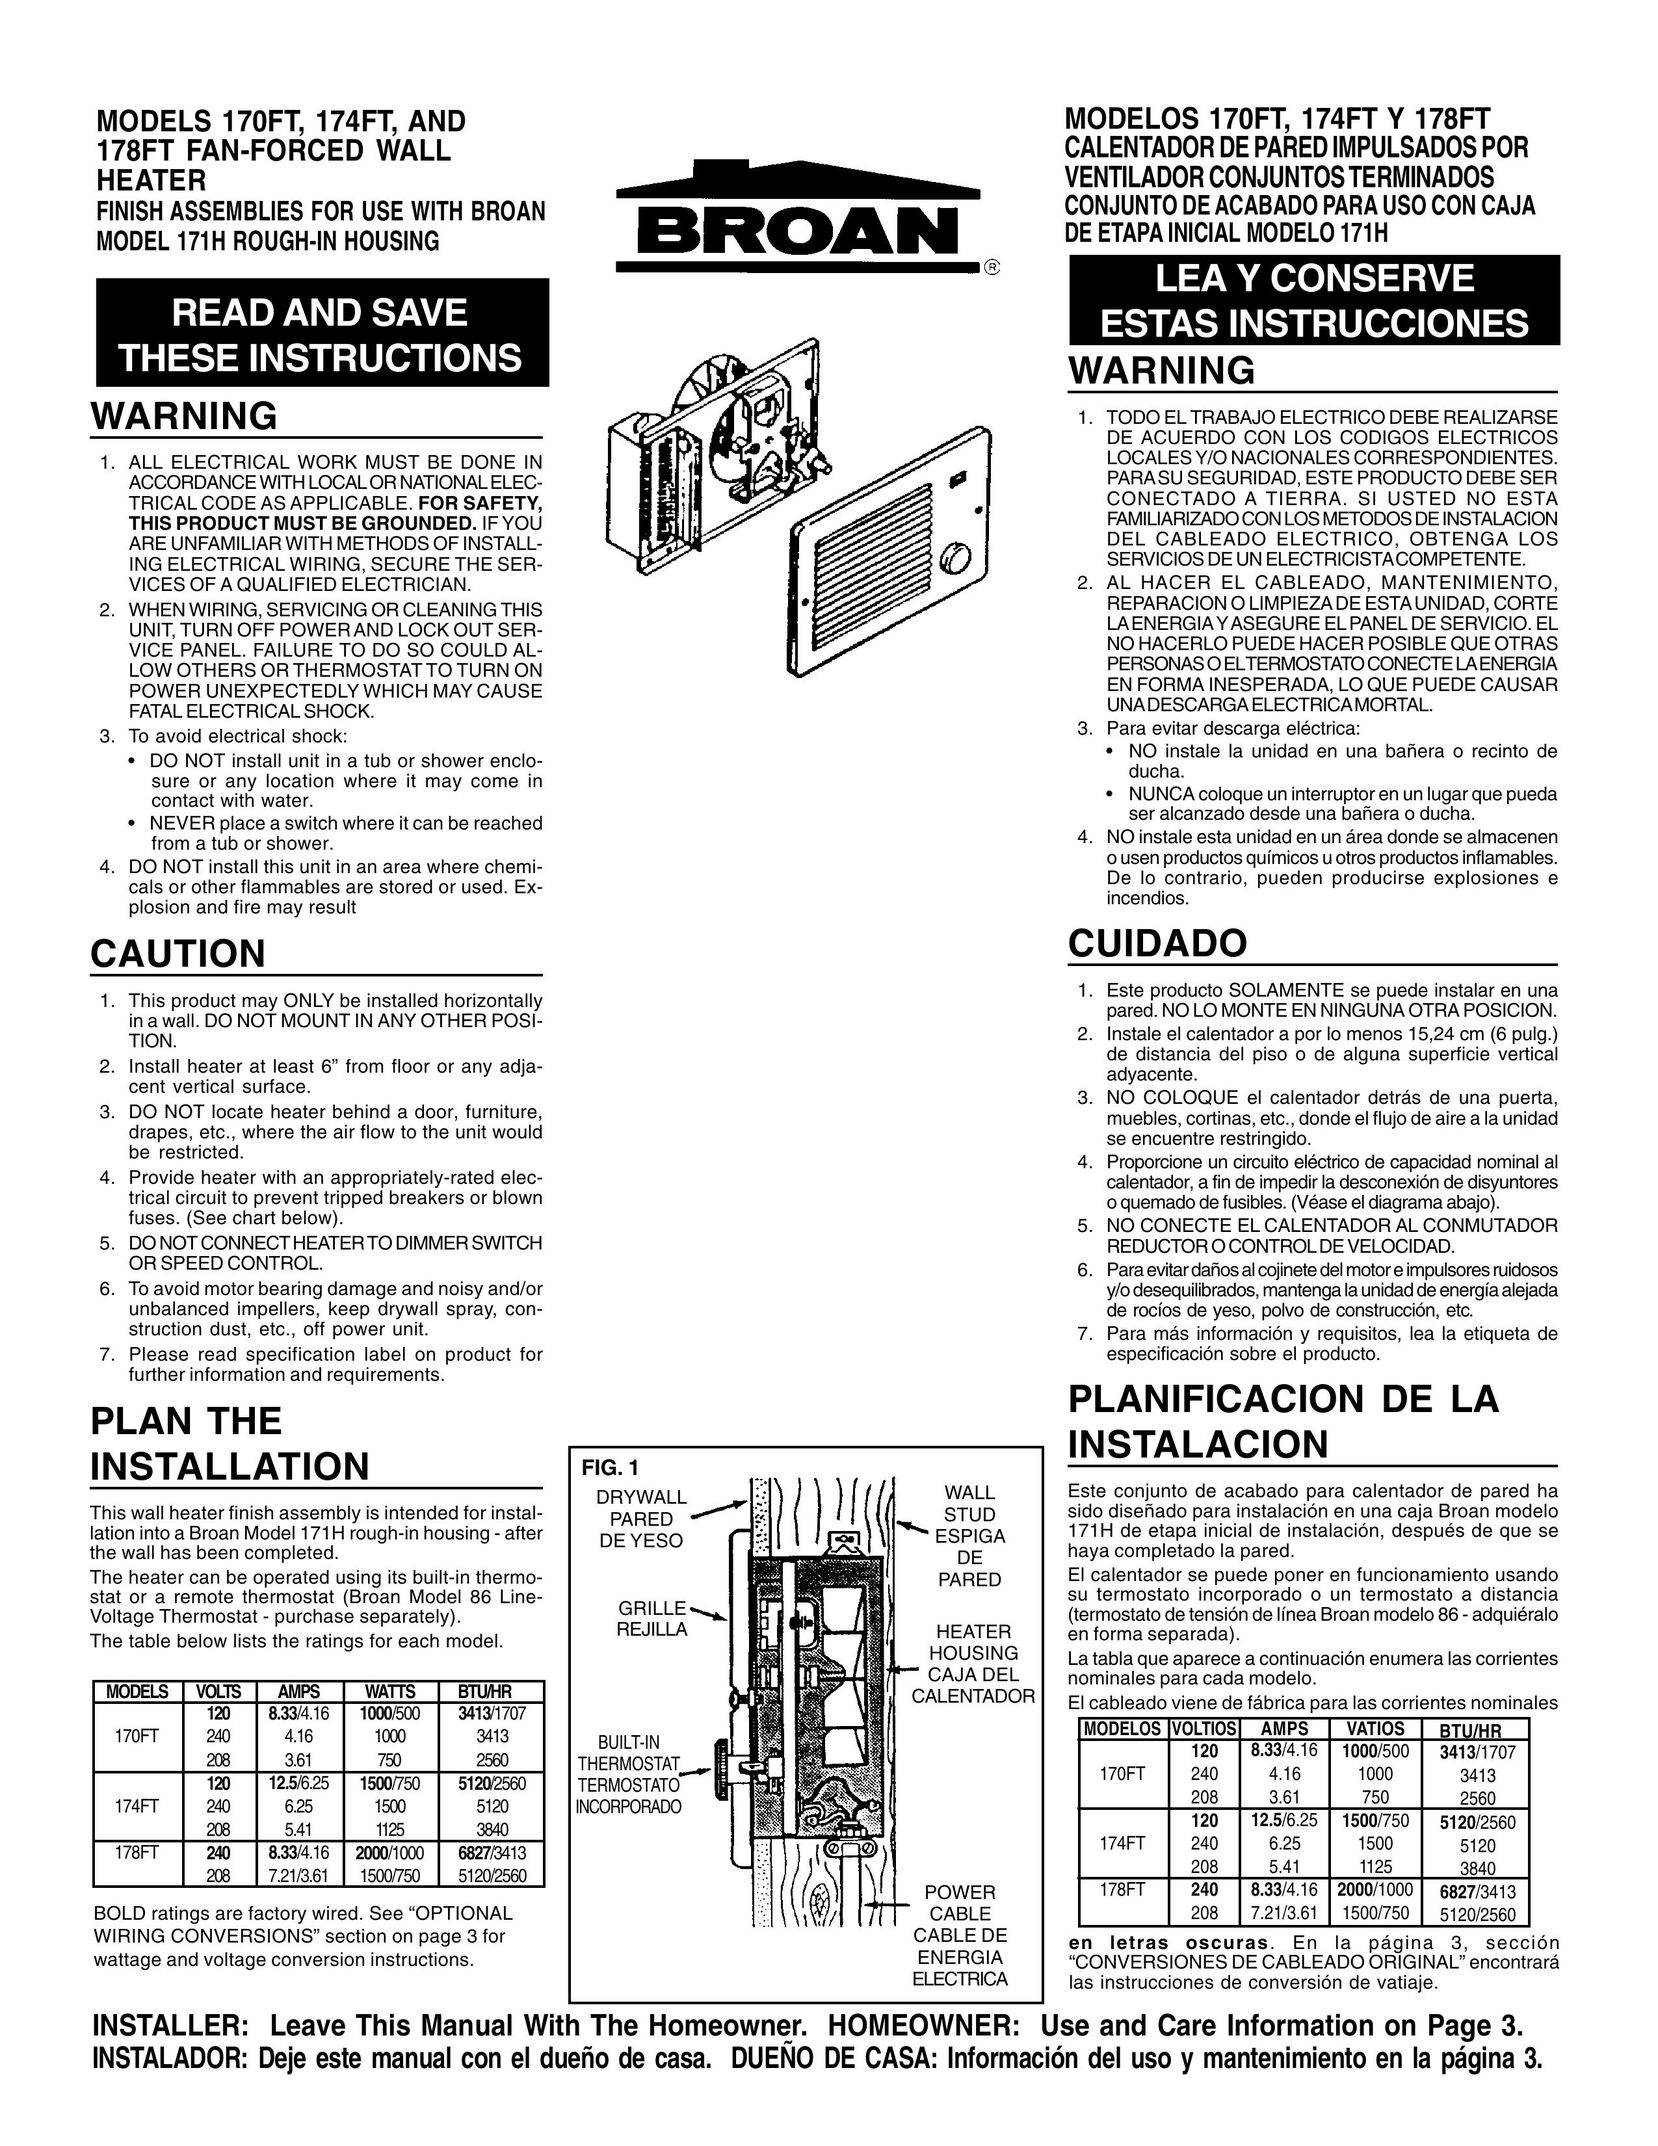 Broan 174FT Air Conditioner User Manual